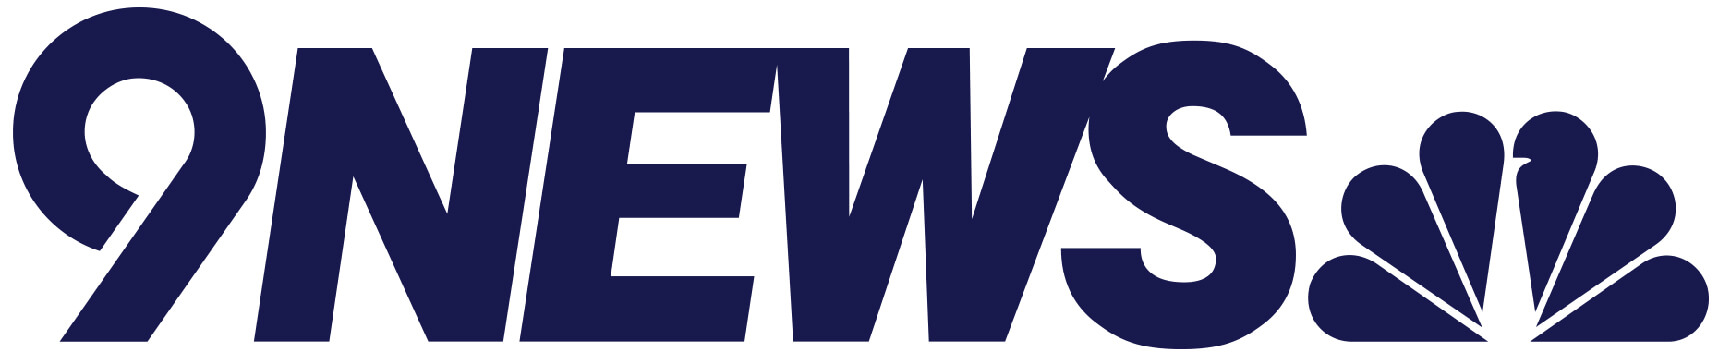 9 news logo